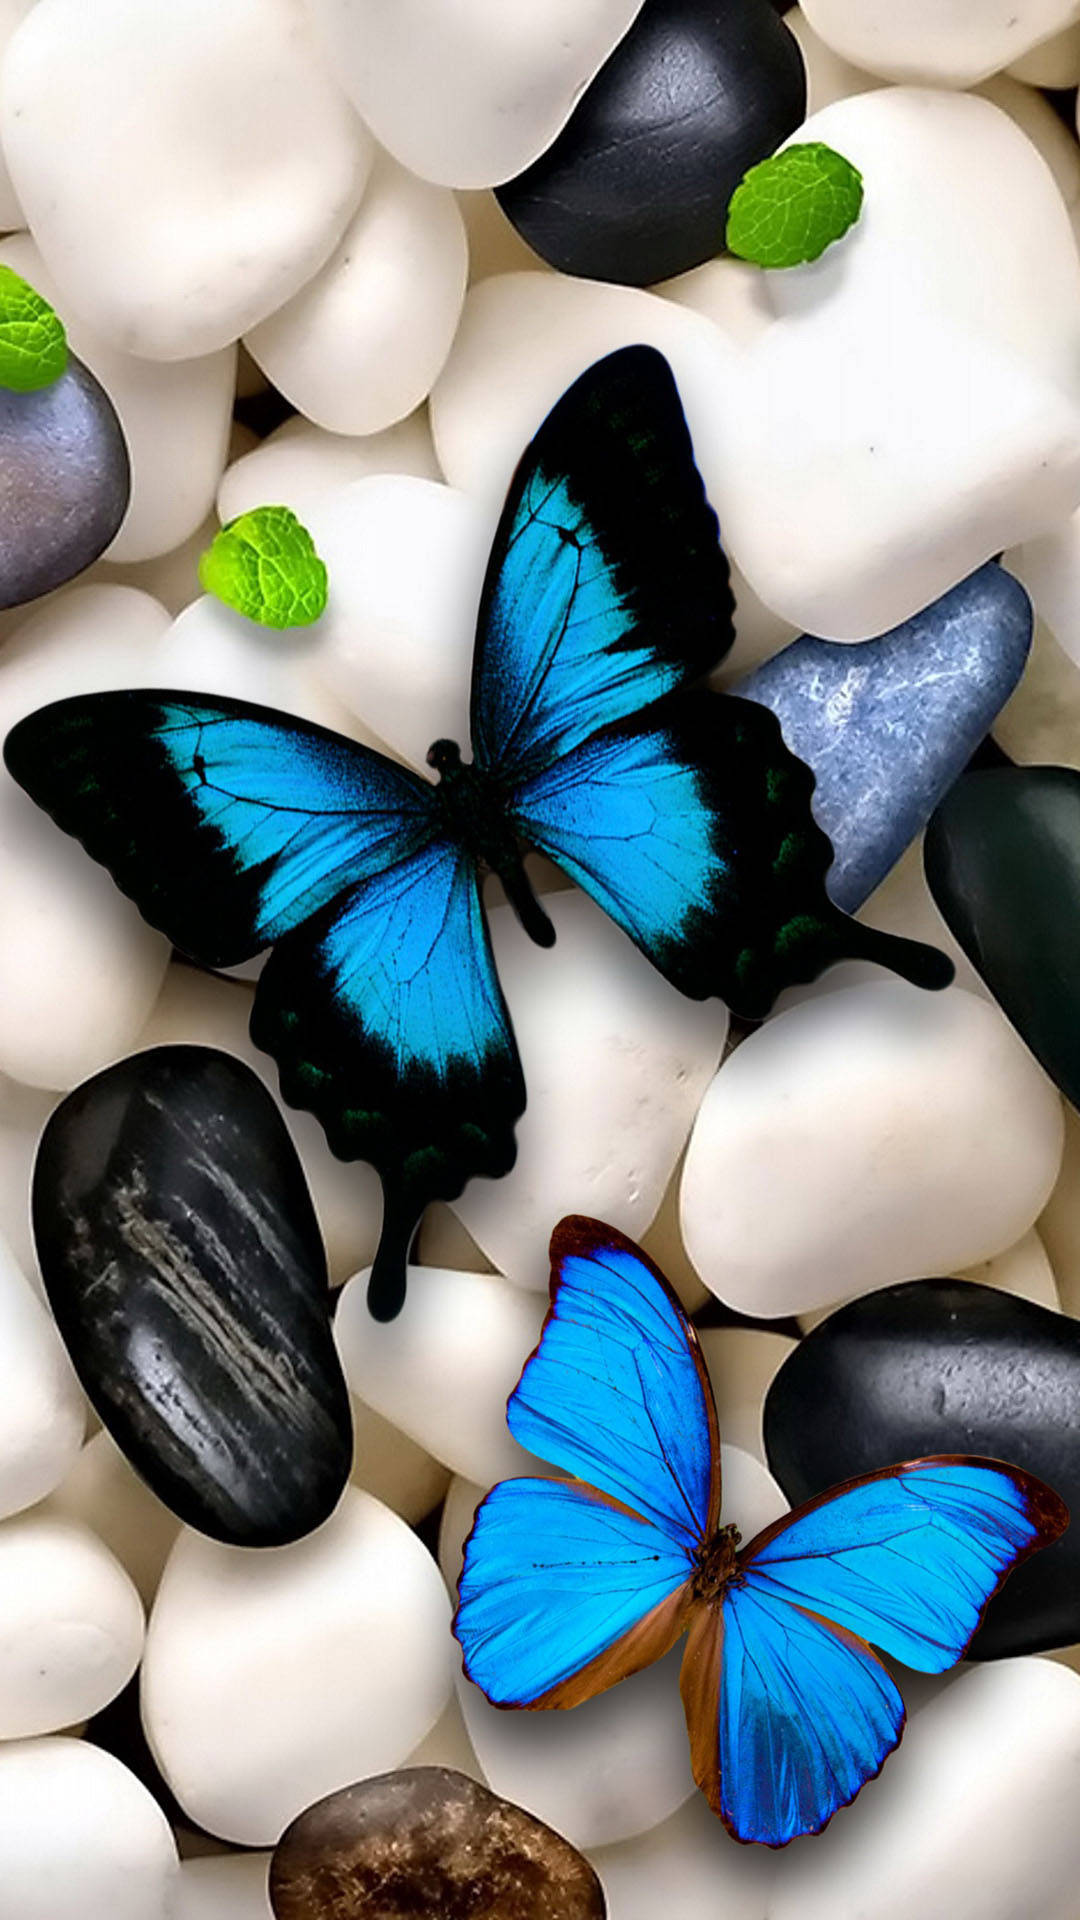 Butterfly Aesthetic On White Stones Wallpaper